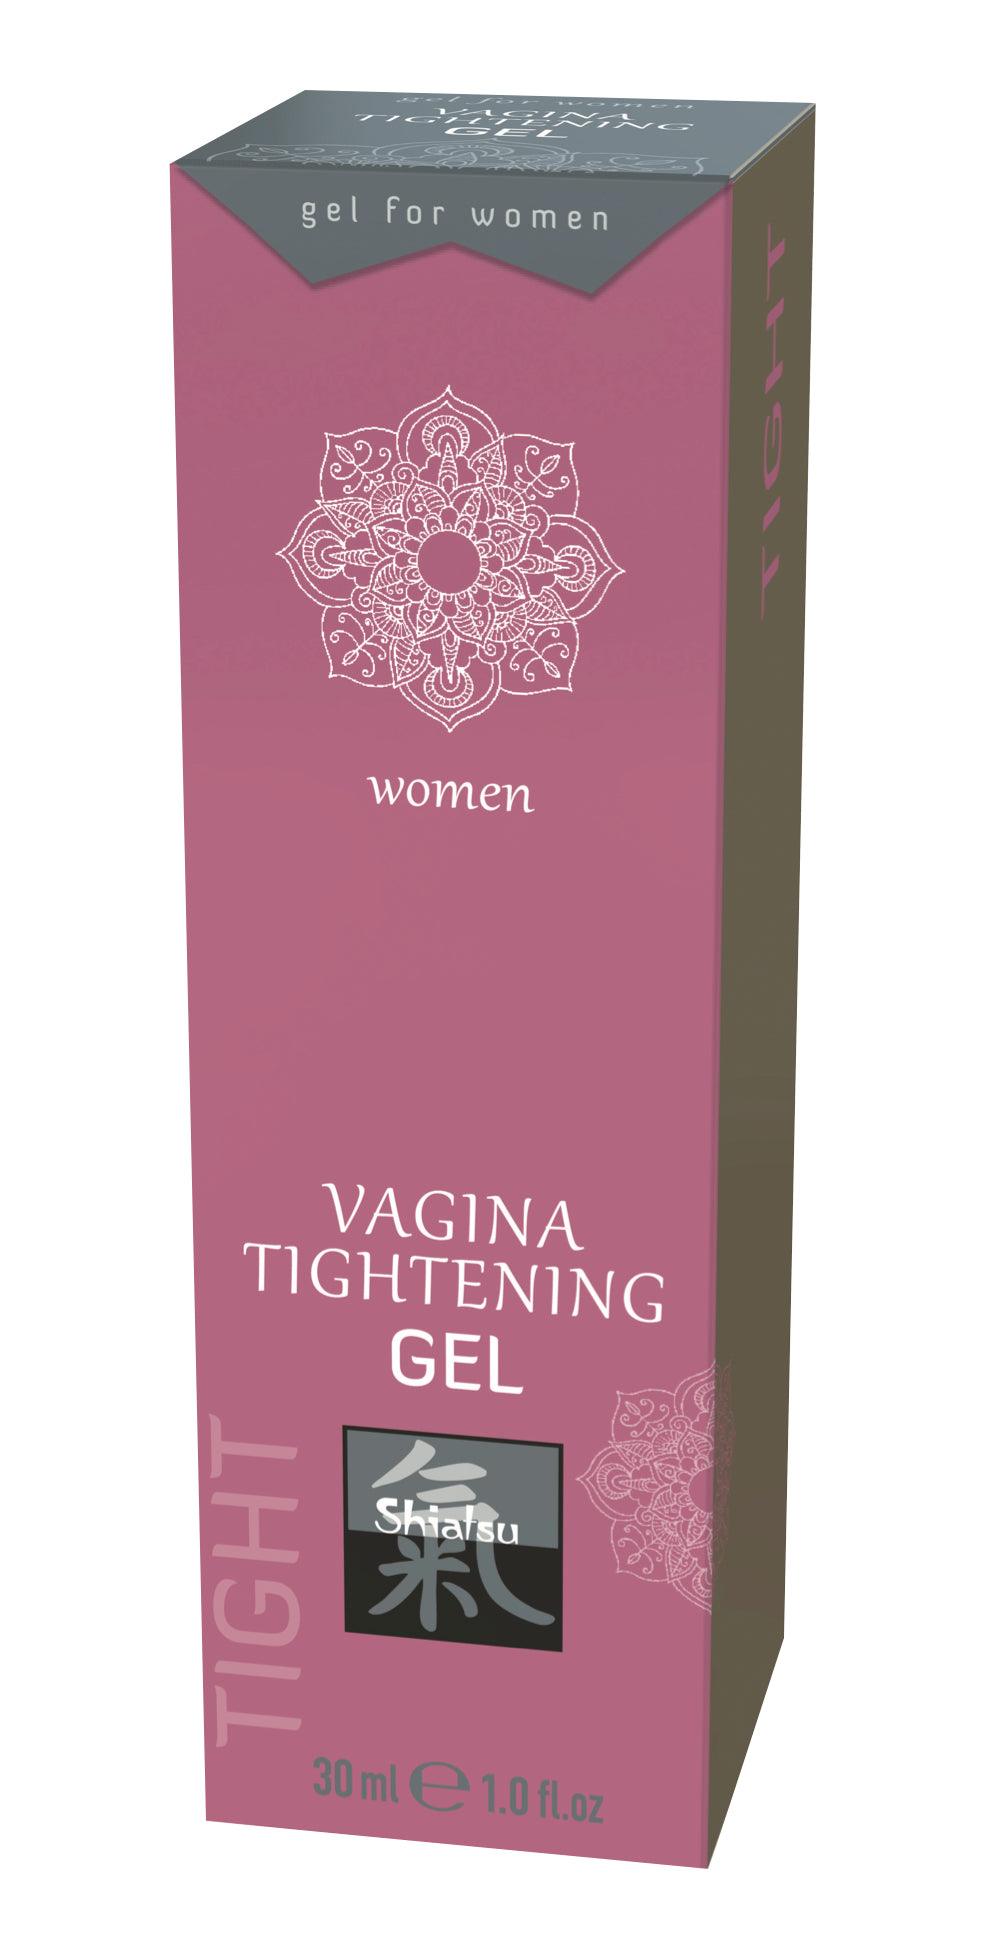 Shiatsu Vagina Tightening Gel 30ml - Take A Peek